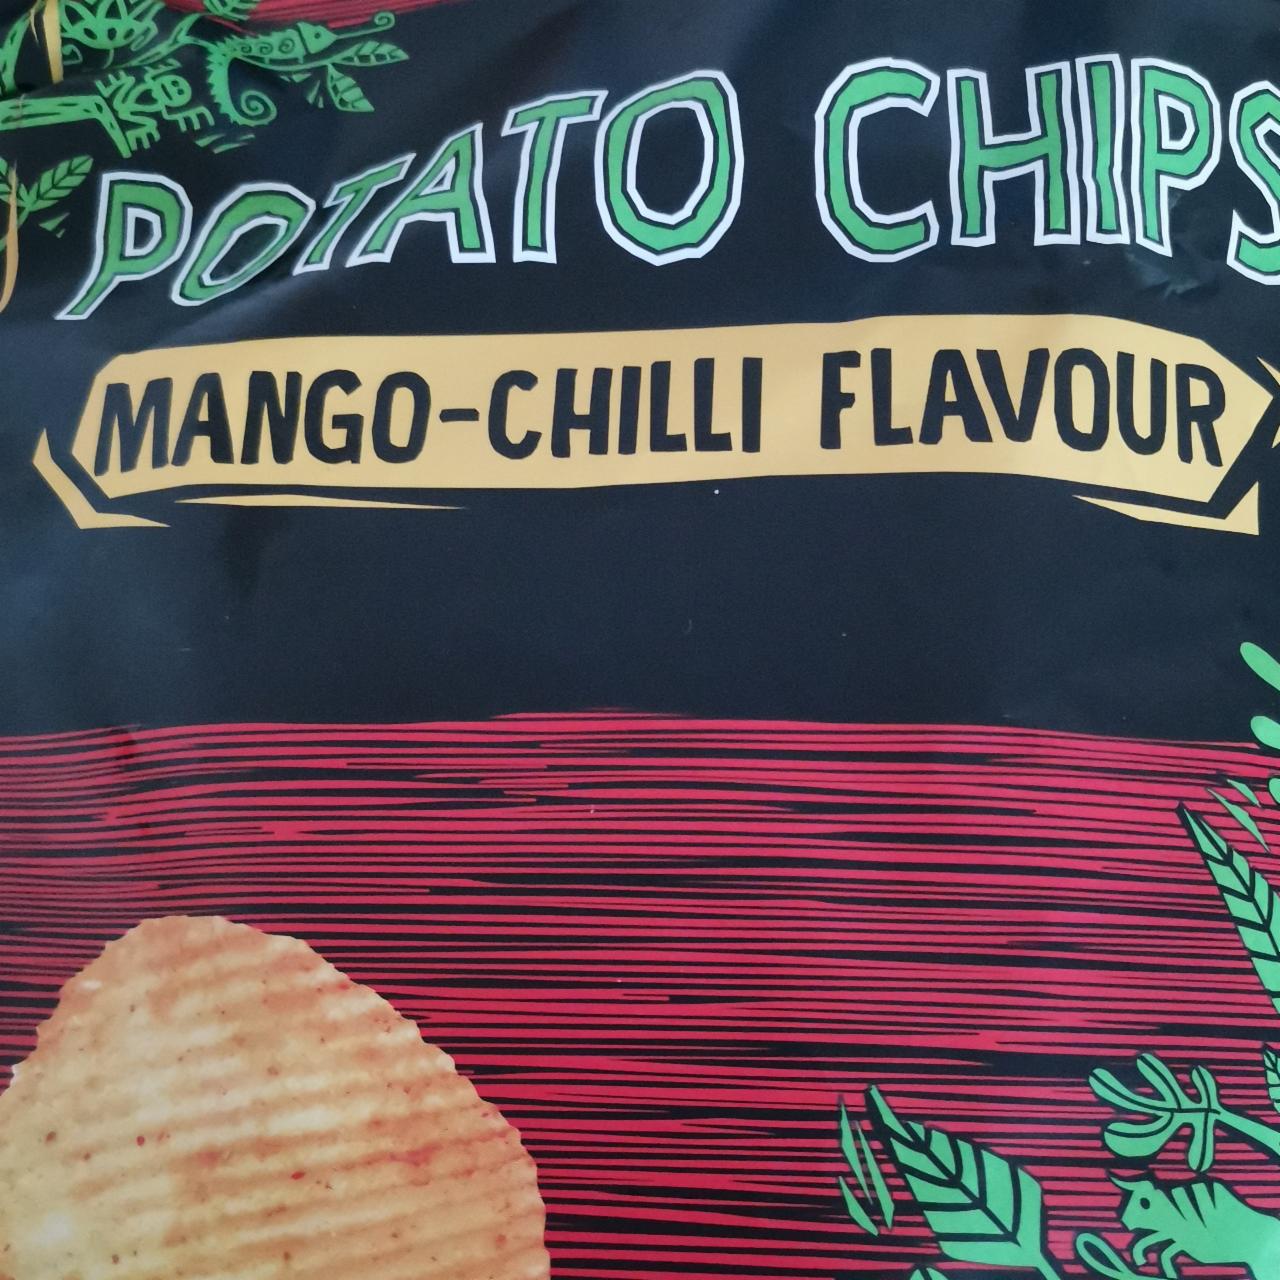 Fotografie - Potato chips mango-chilli flavour Alma latina